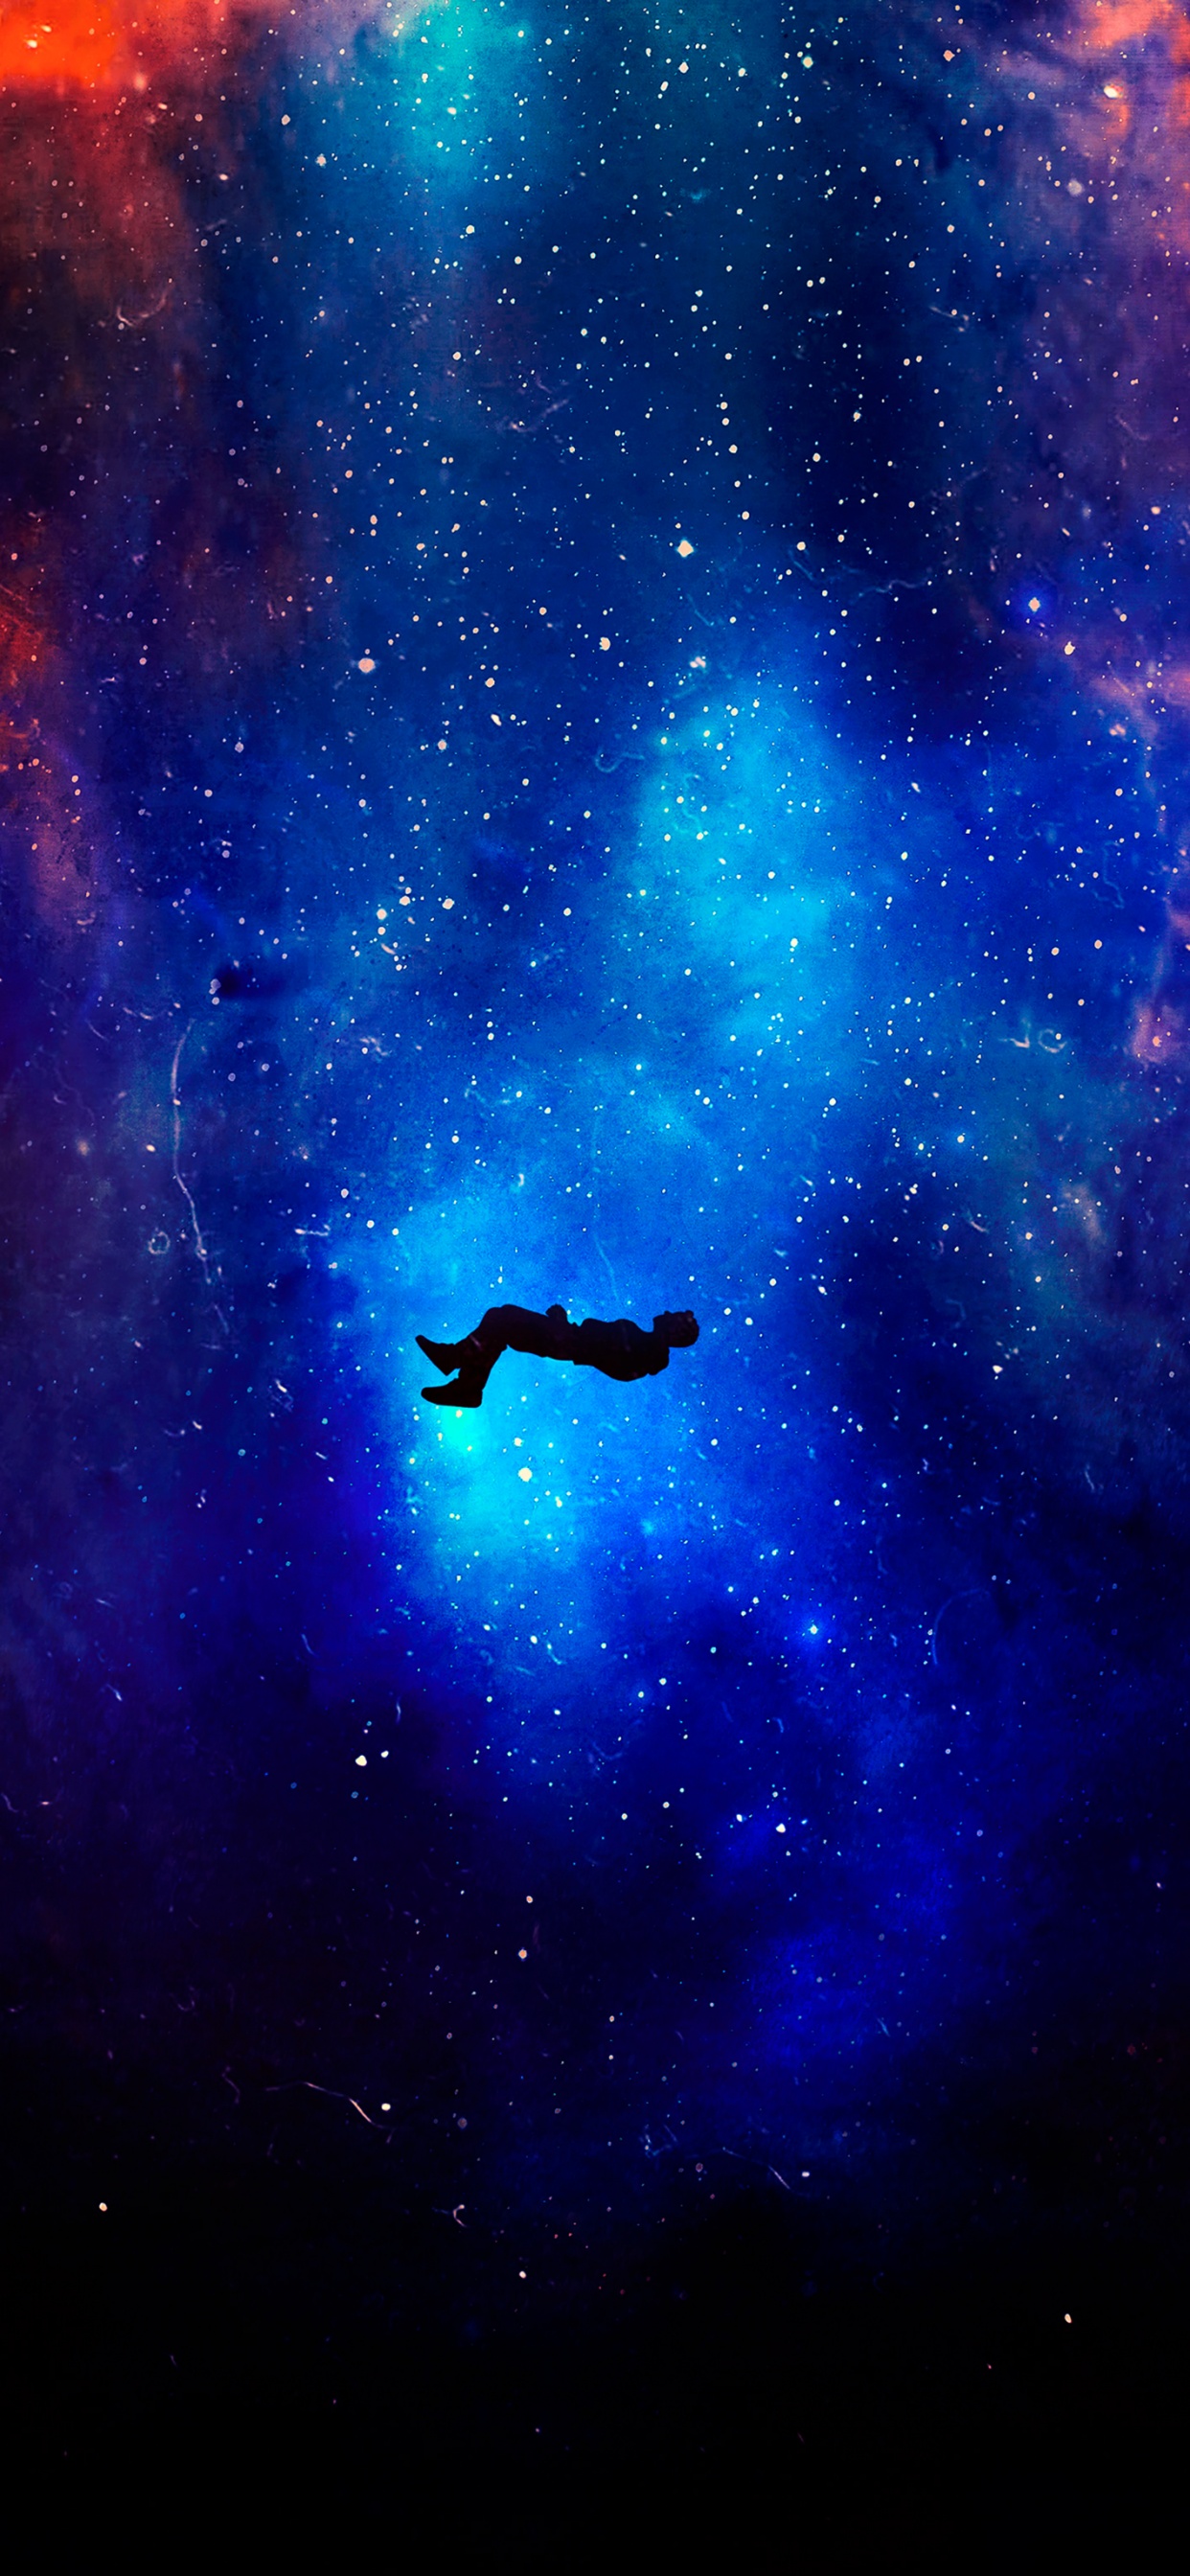 Space Nebula iPhone Wallpaper  4K